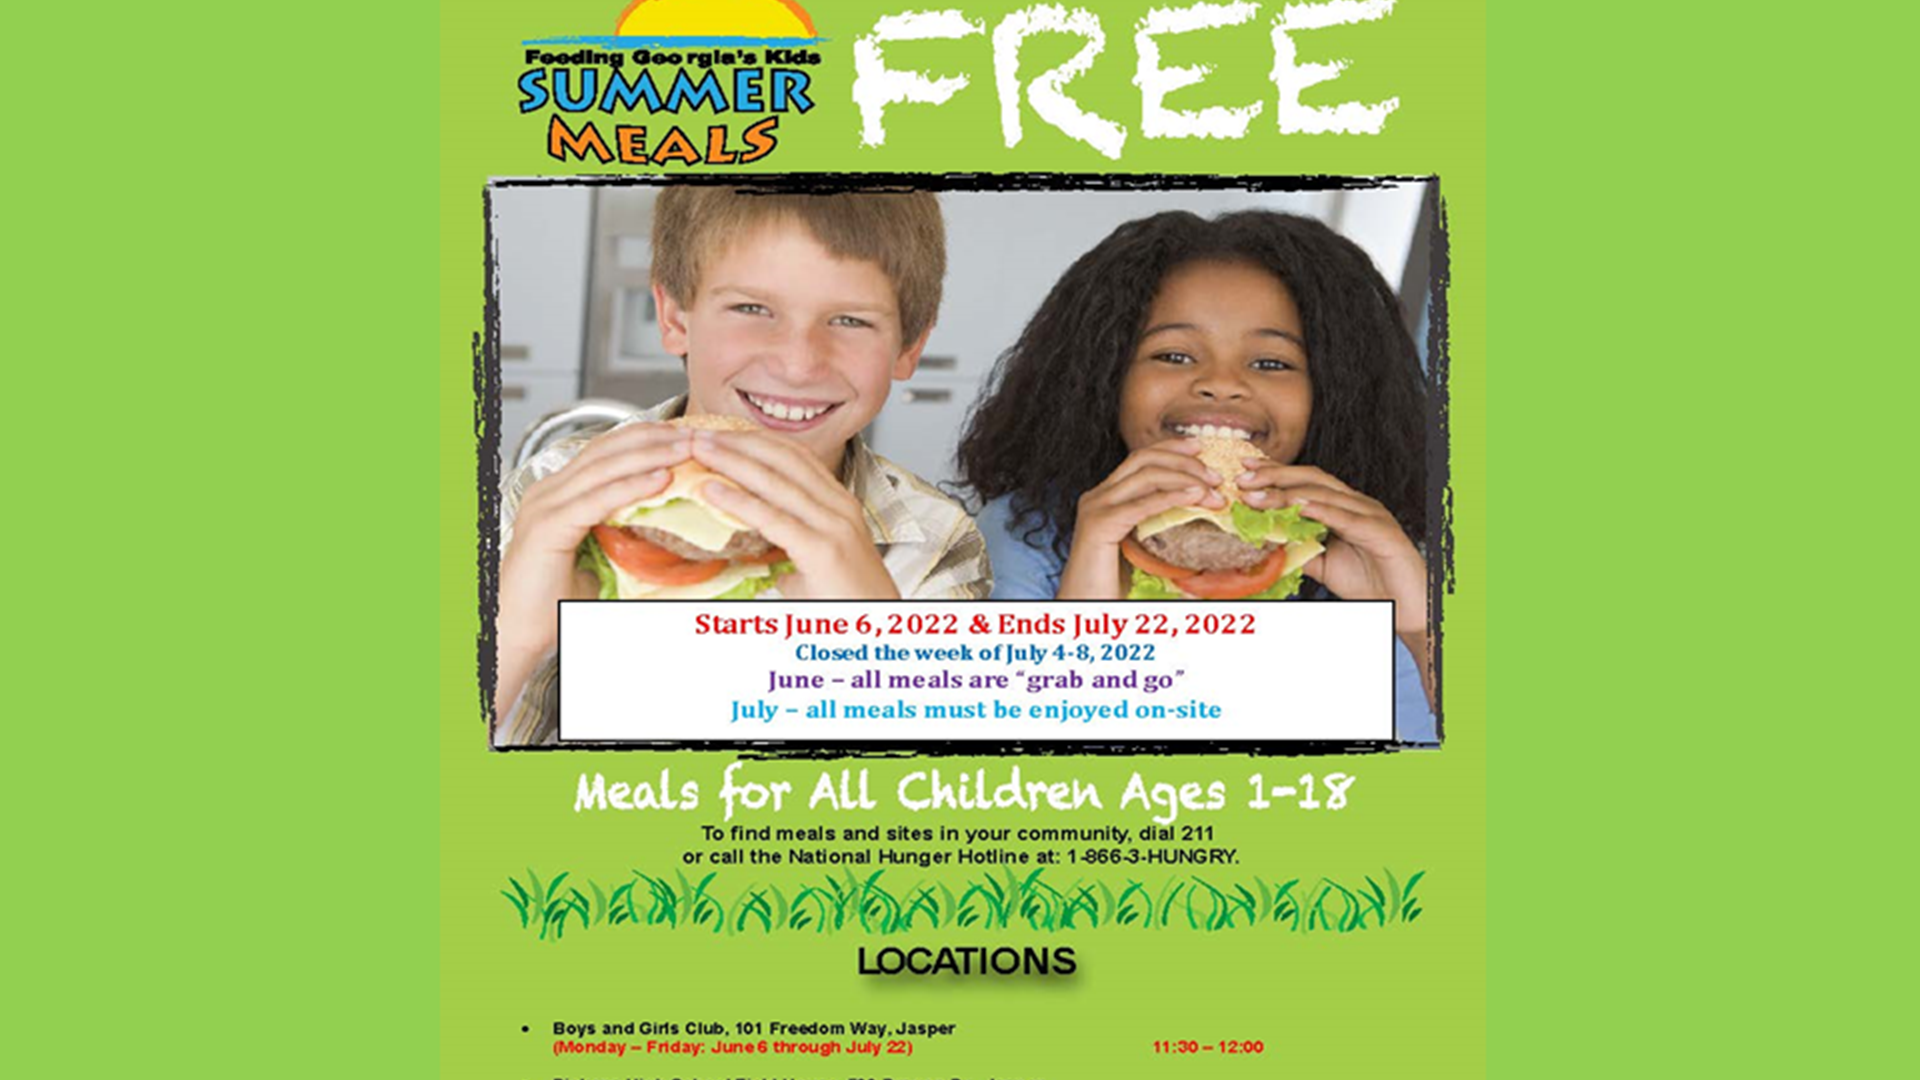 Feed Georgia's Kids:  Summer Free Meals!